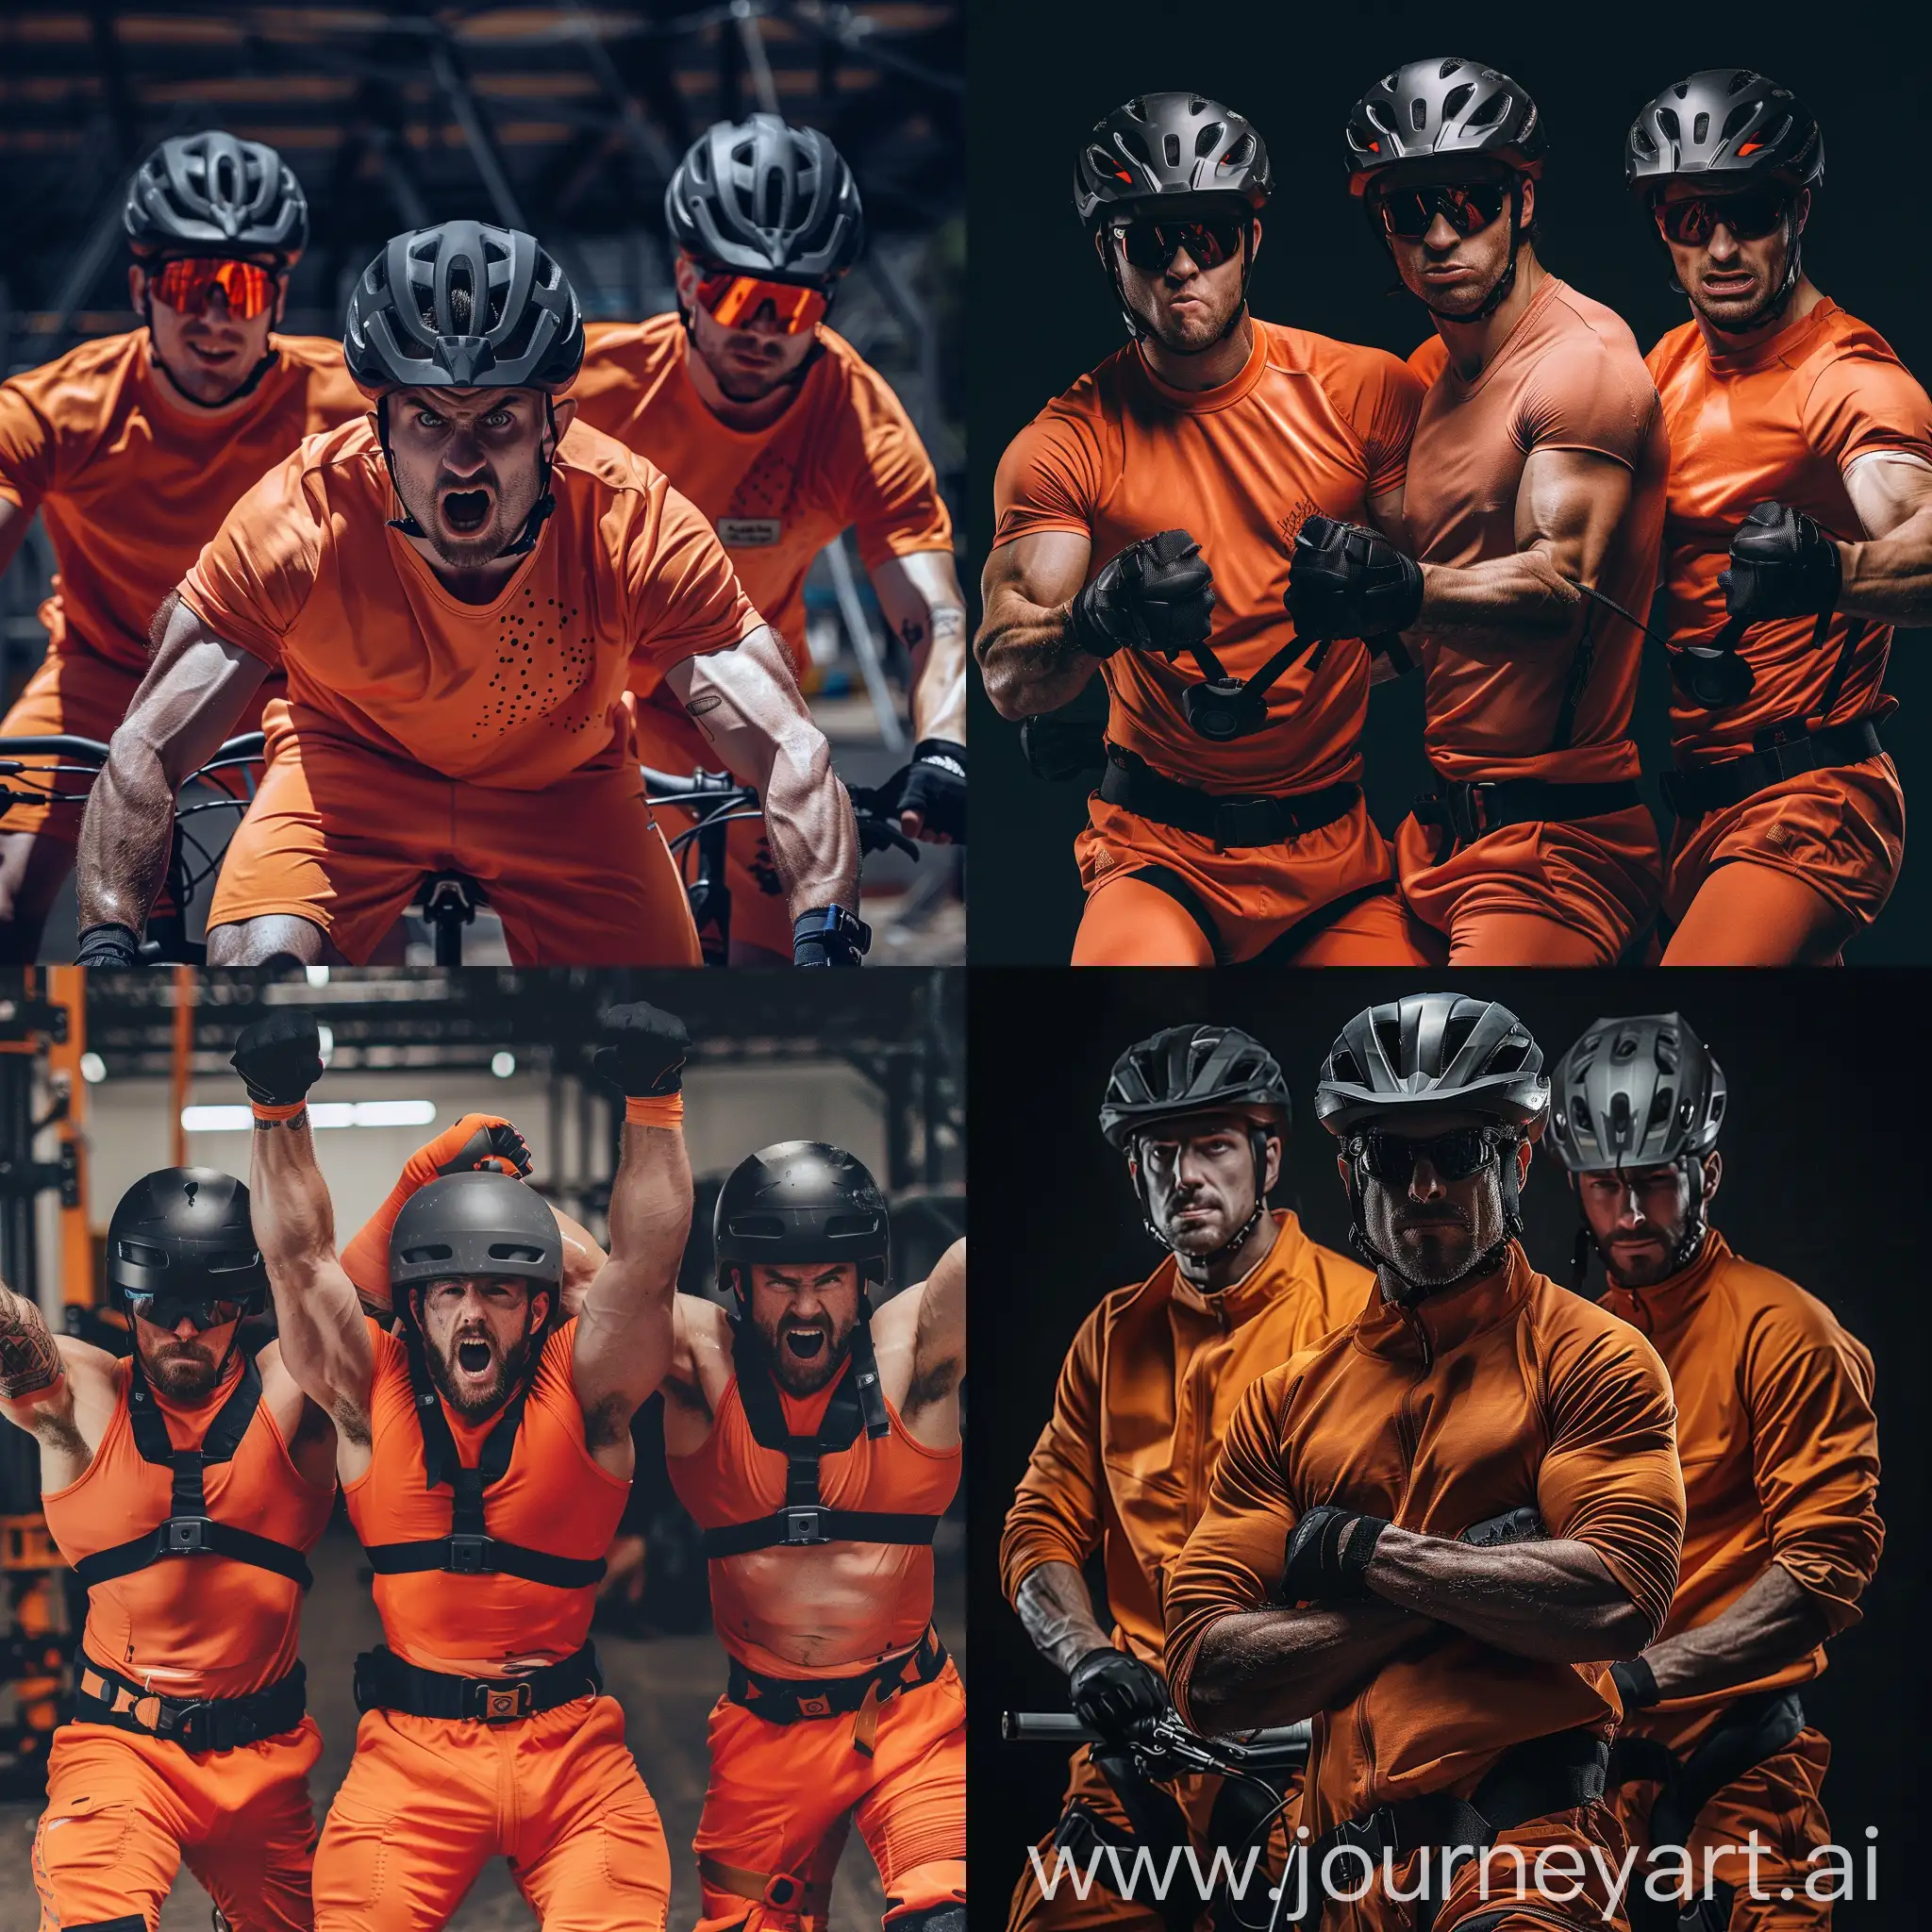 Three-Muscular-Men-in-Orange-Clothing-and-Black-Helmets